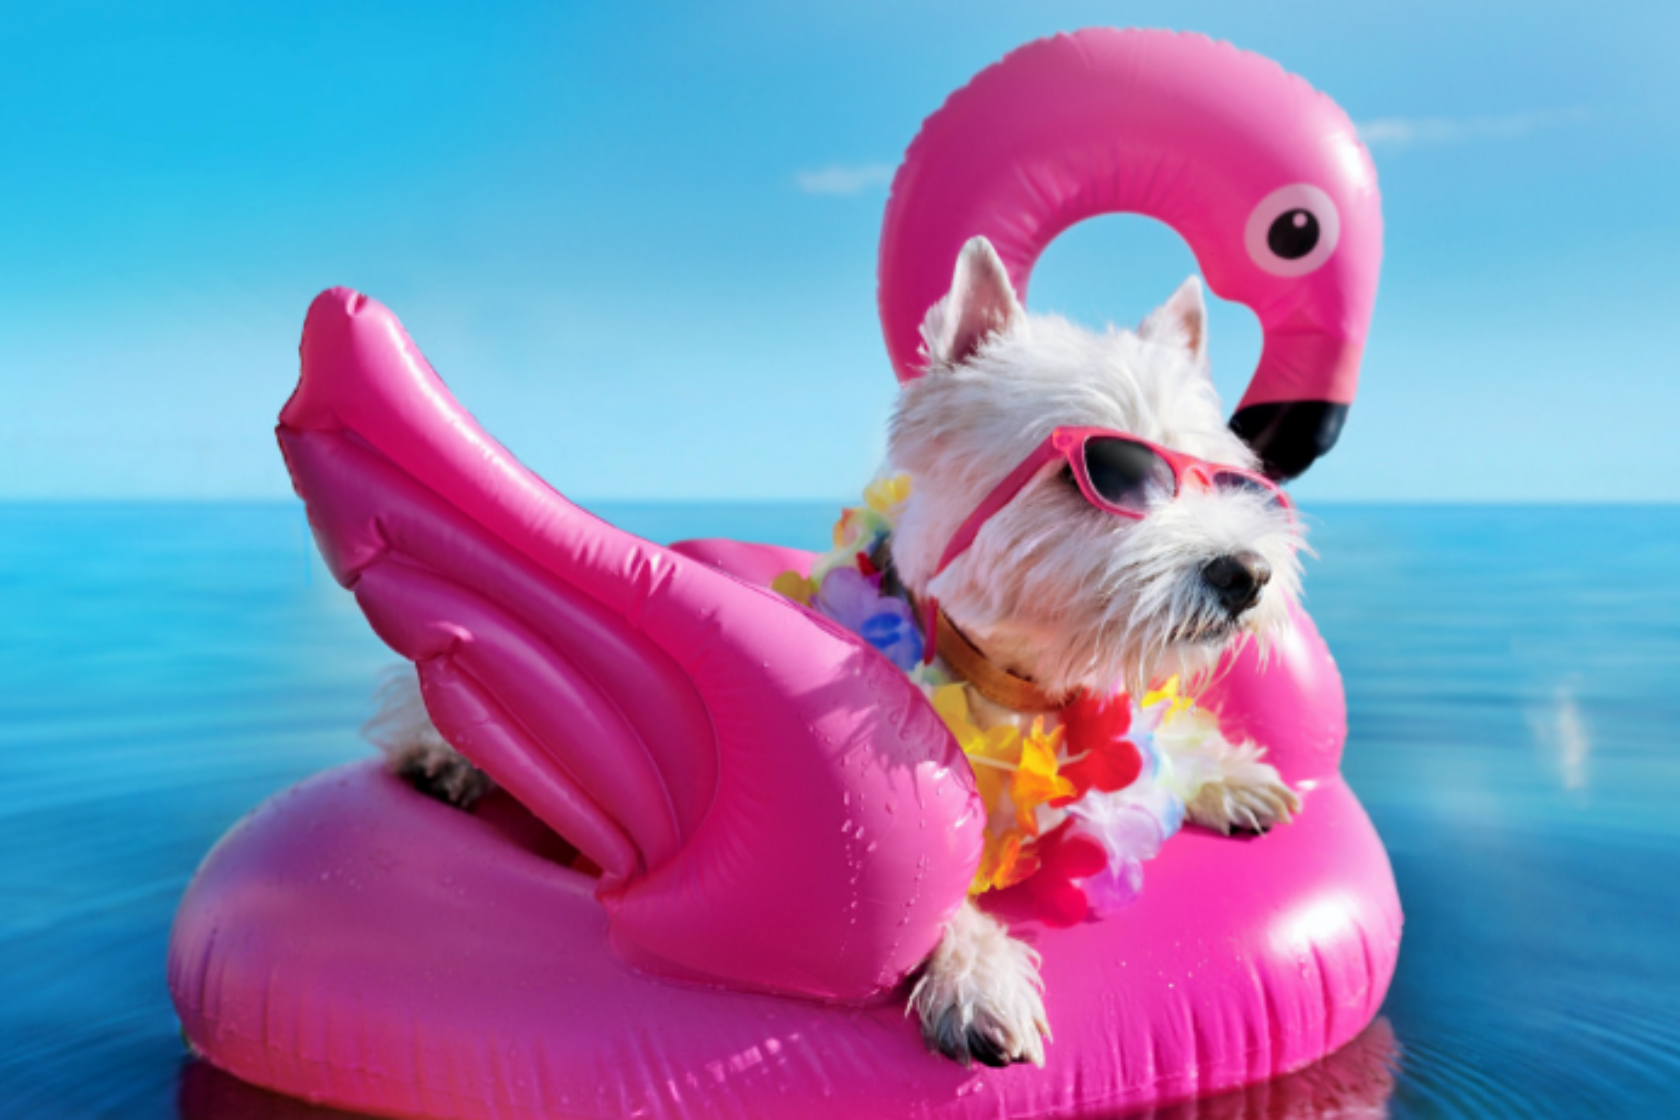 Dog wearing sunglasses on a pink flamingo pool float